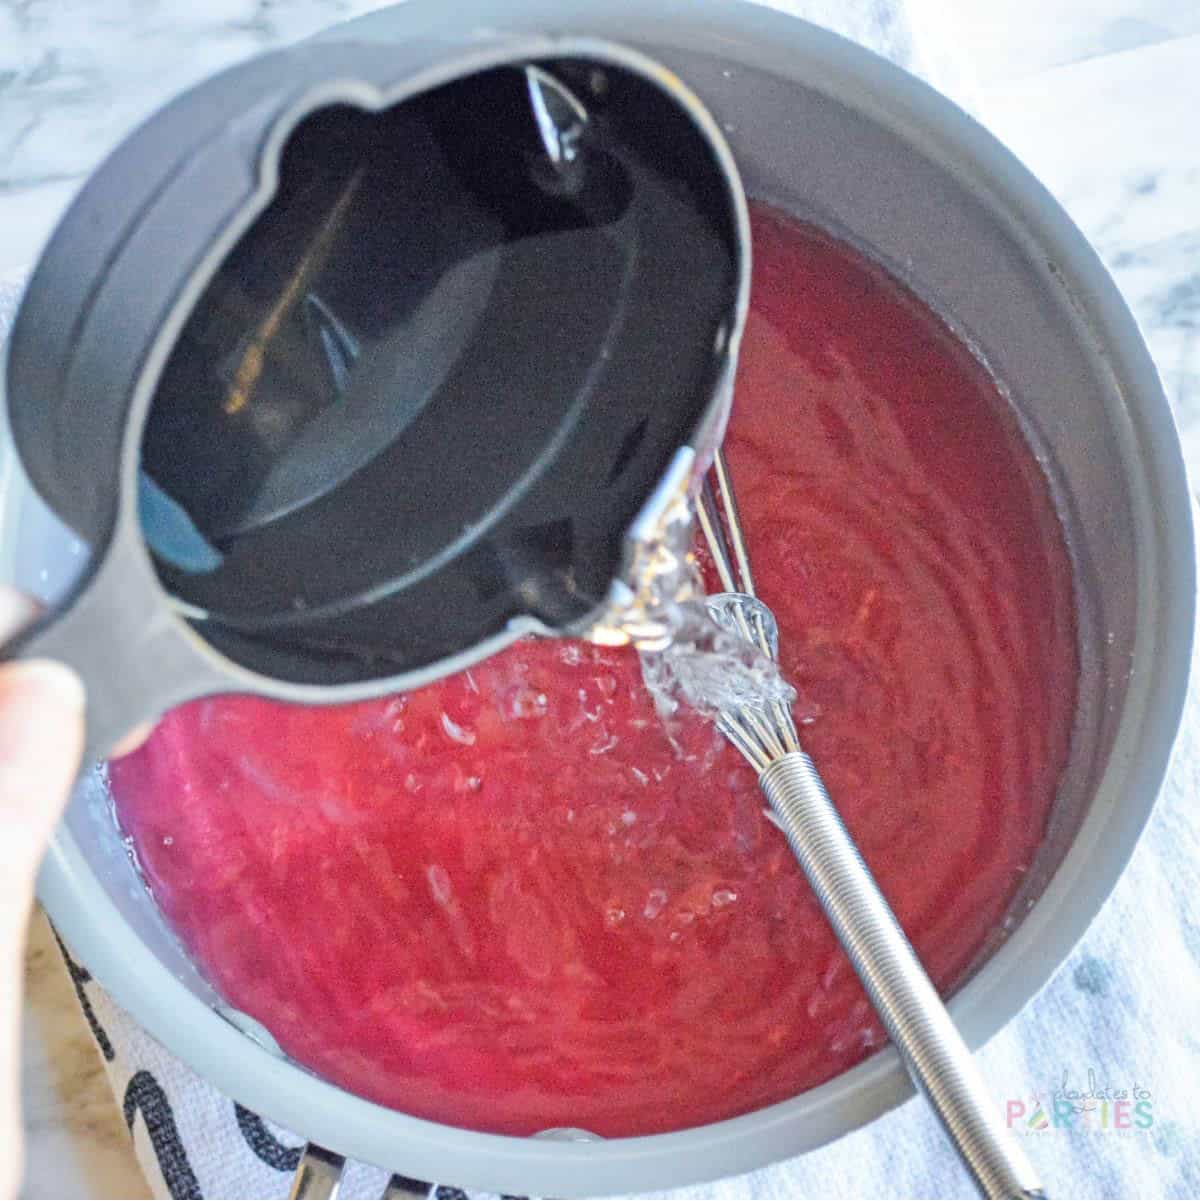 Mixing vodka into pink starburst gelatin mixture for jello shots.